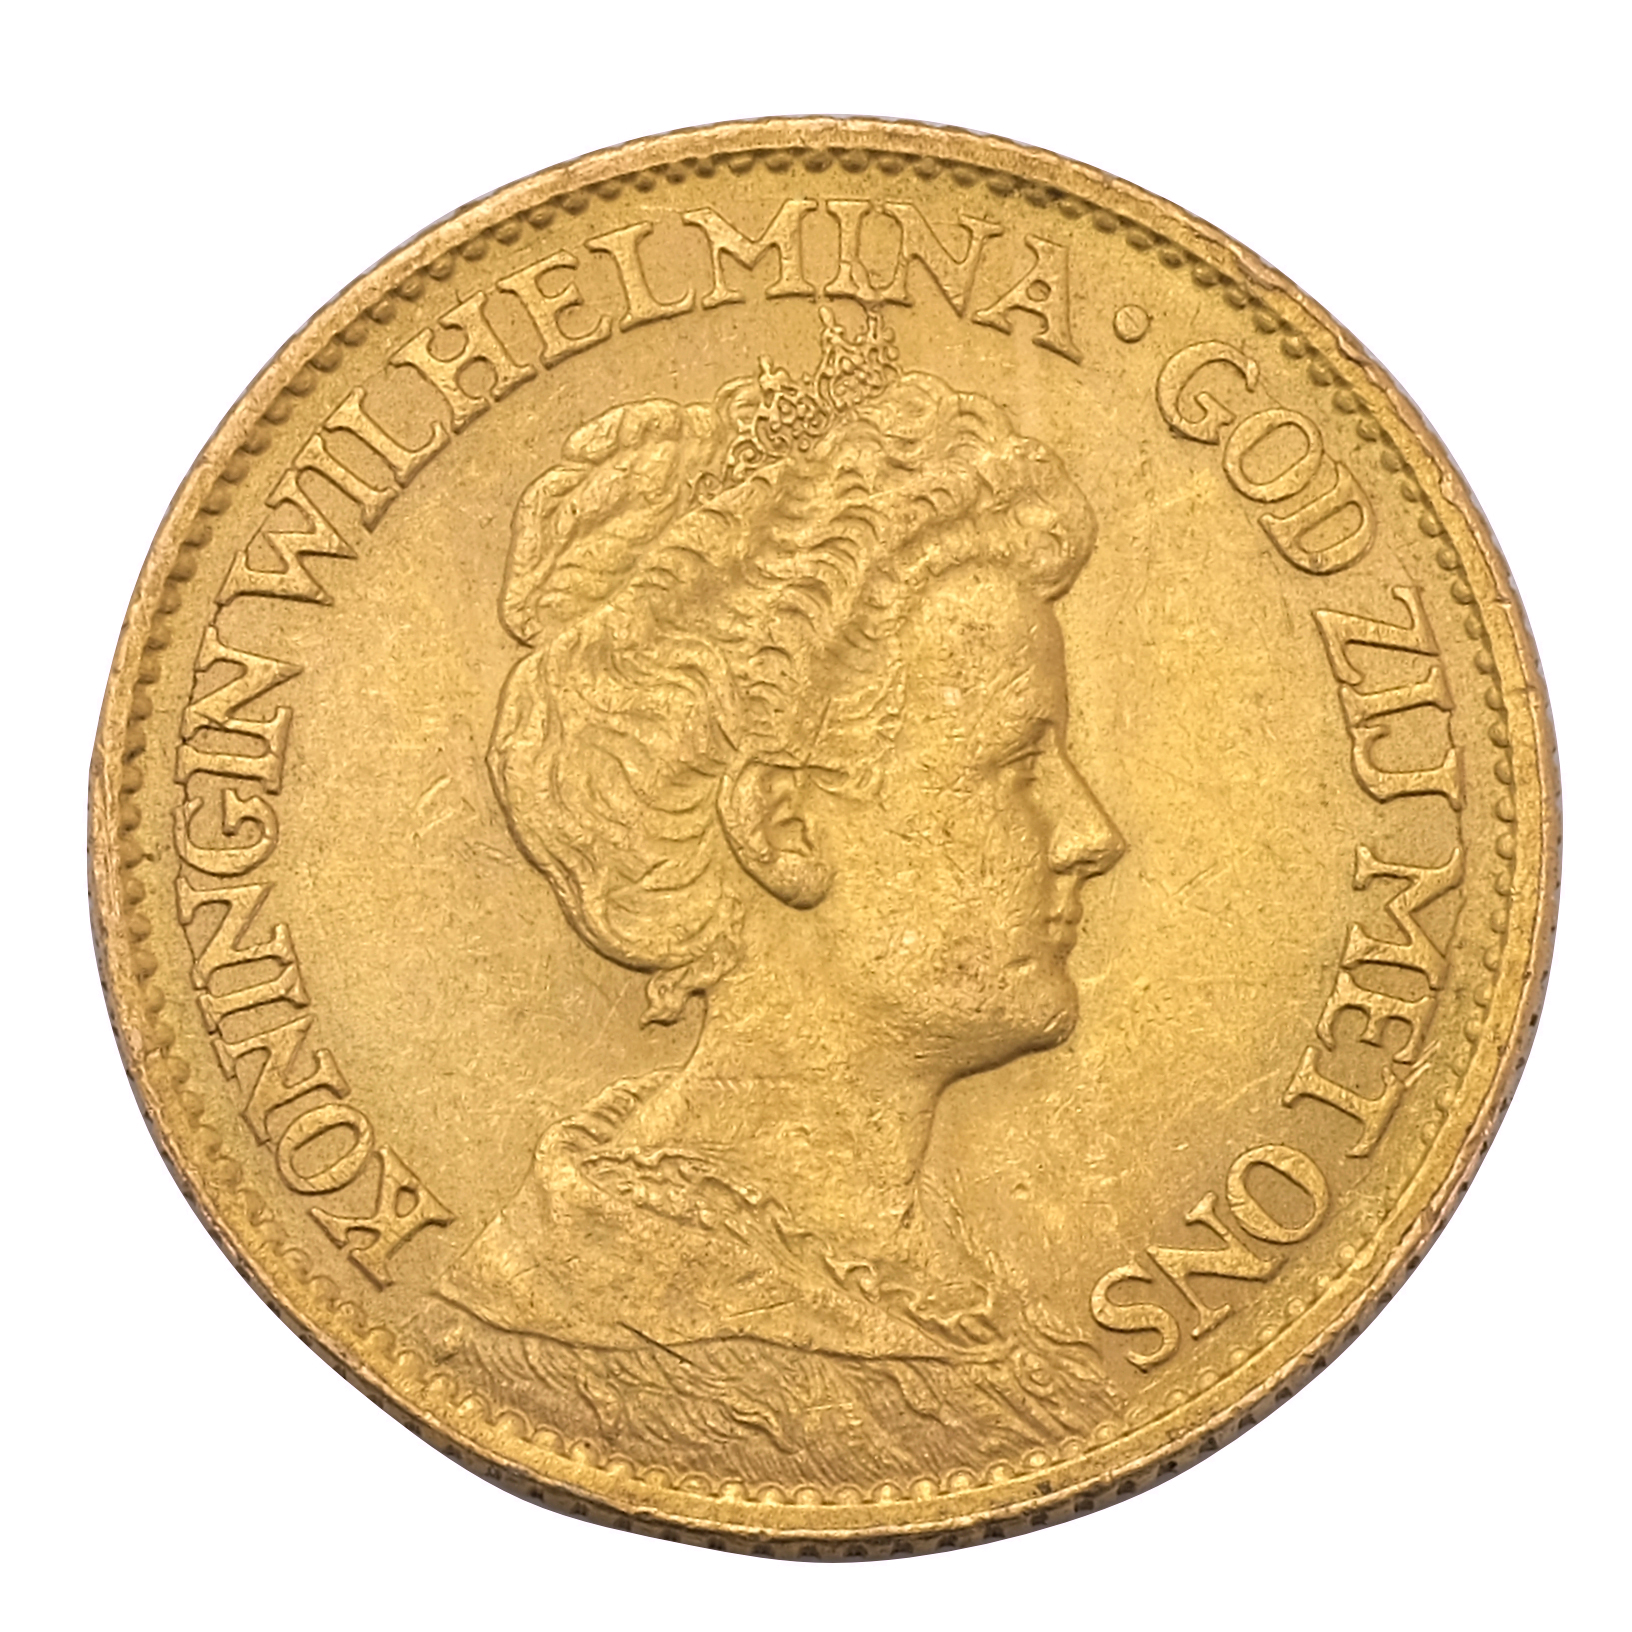 10 Guilders Netherlands Gold Coin (Best Value)